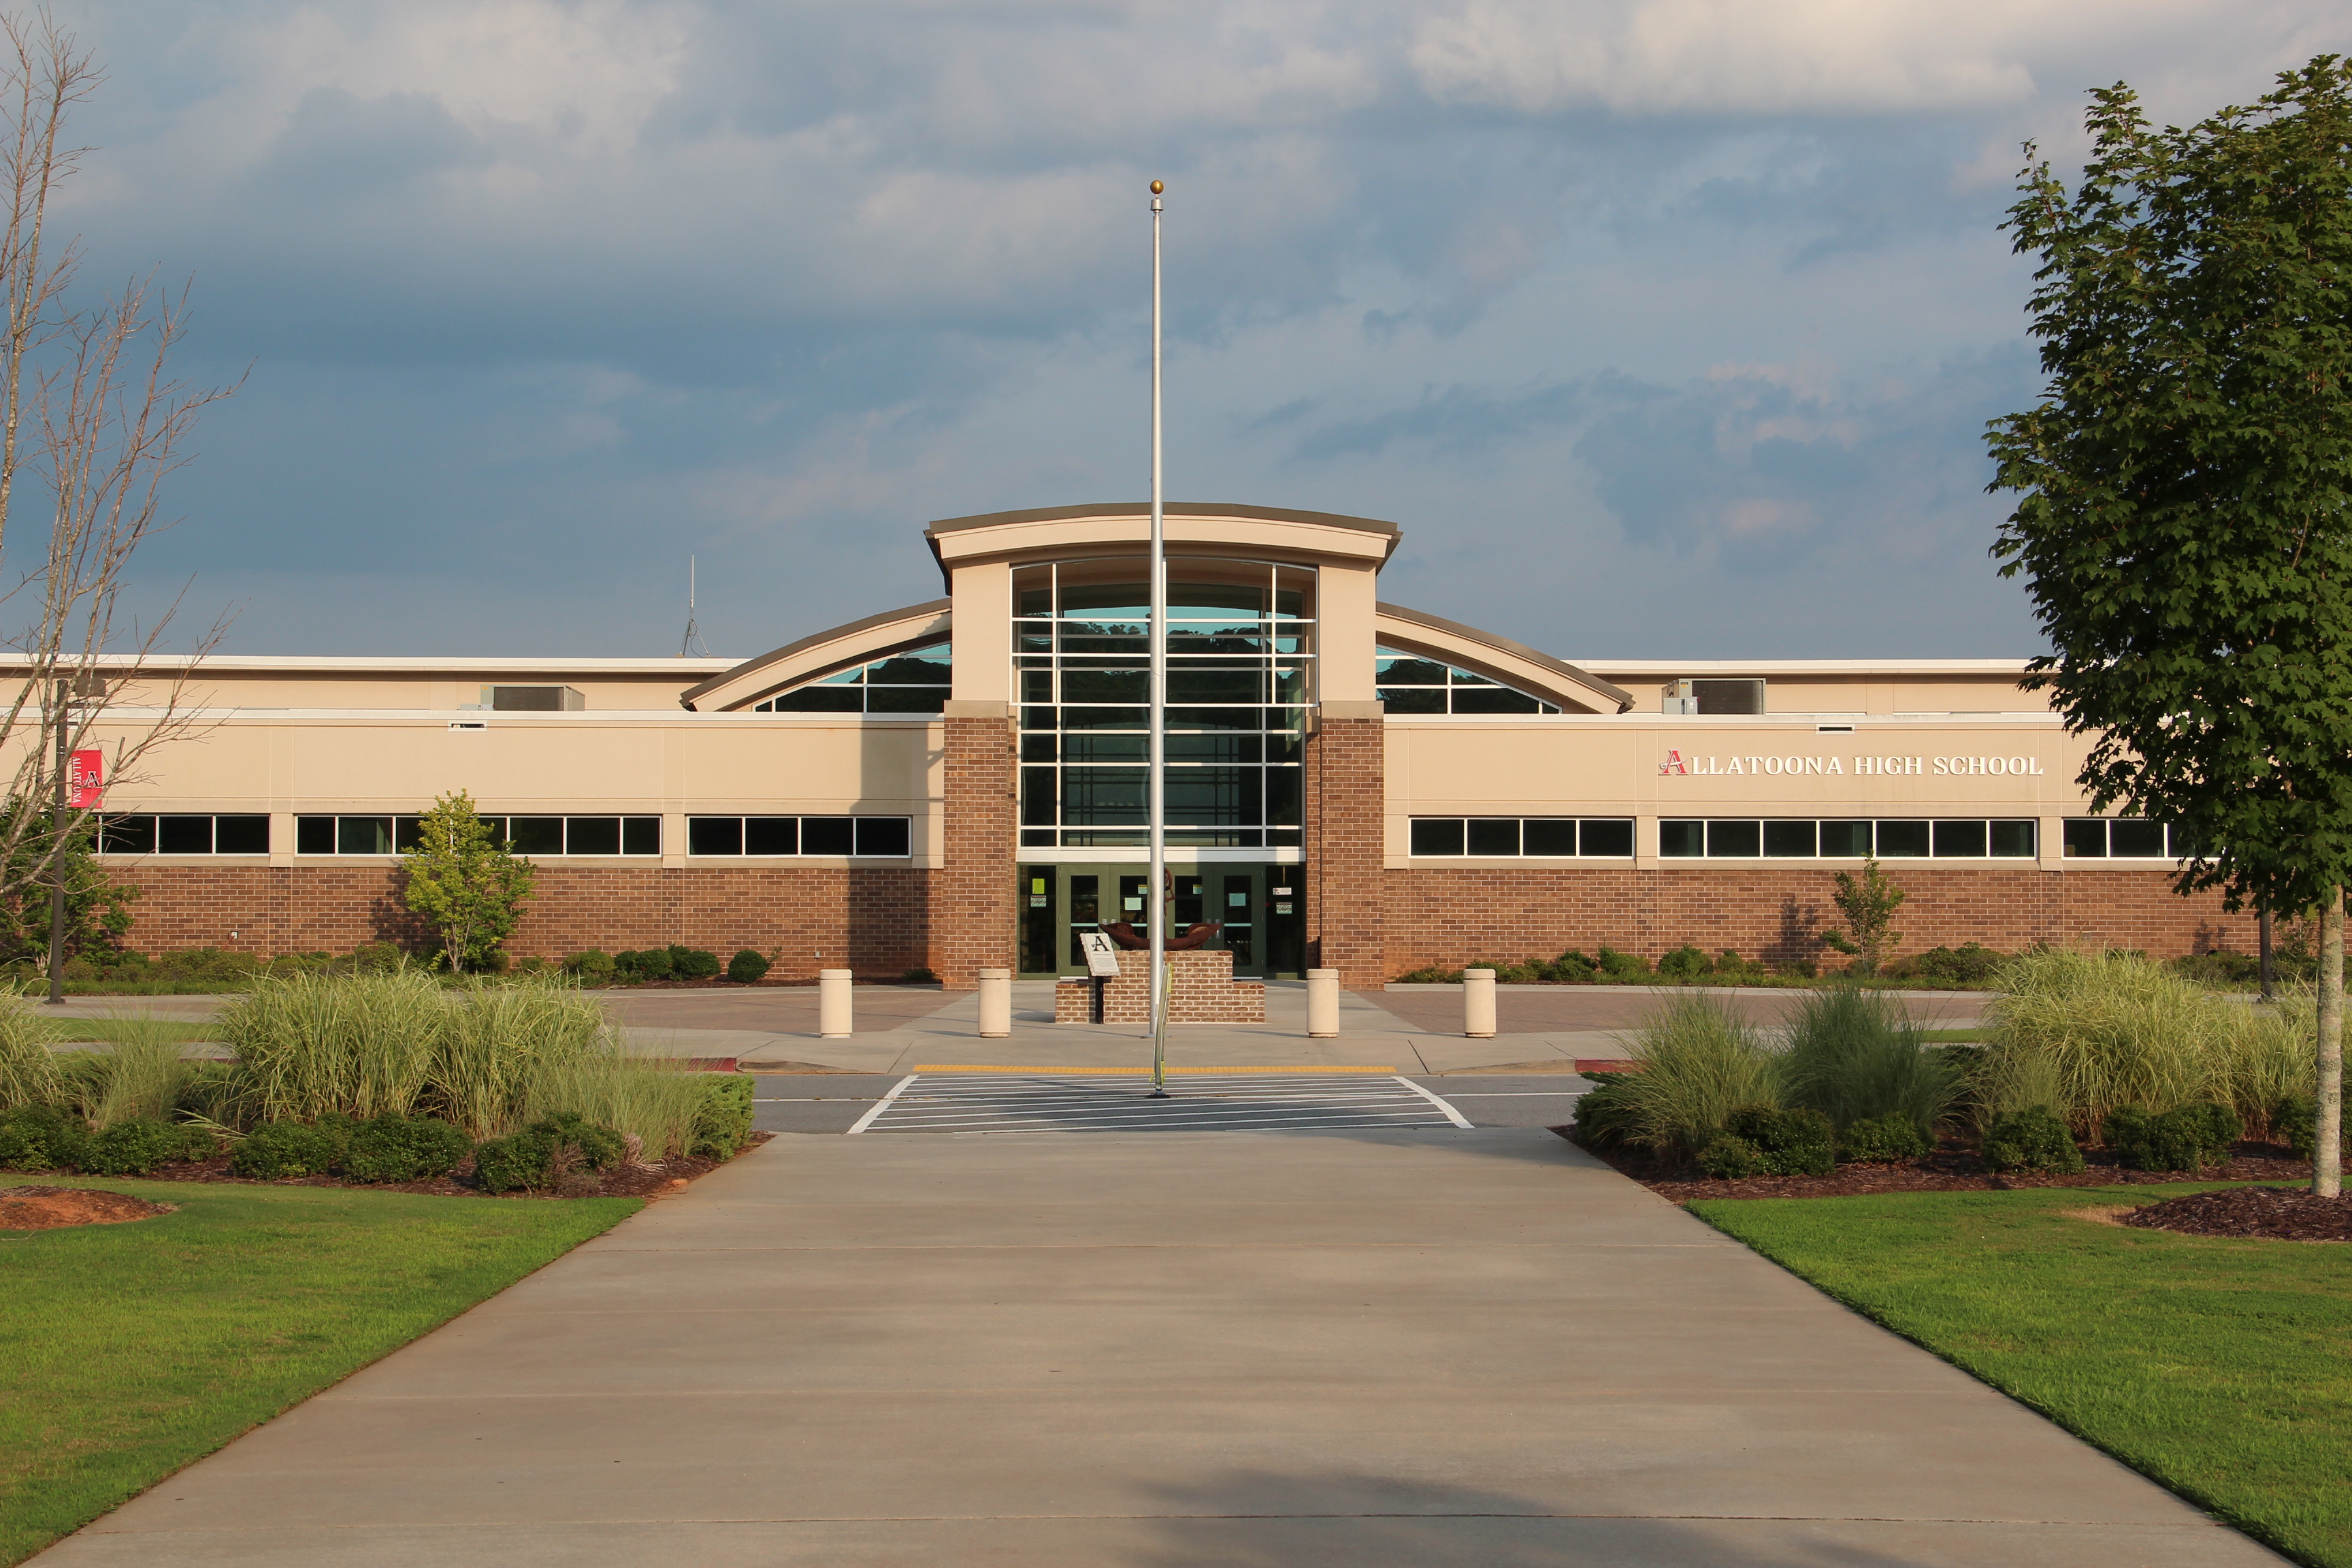 File:Allatoona High School, Cobb County, Georgia.JPG - Wikimedia Commons